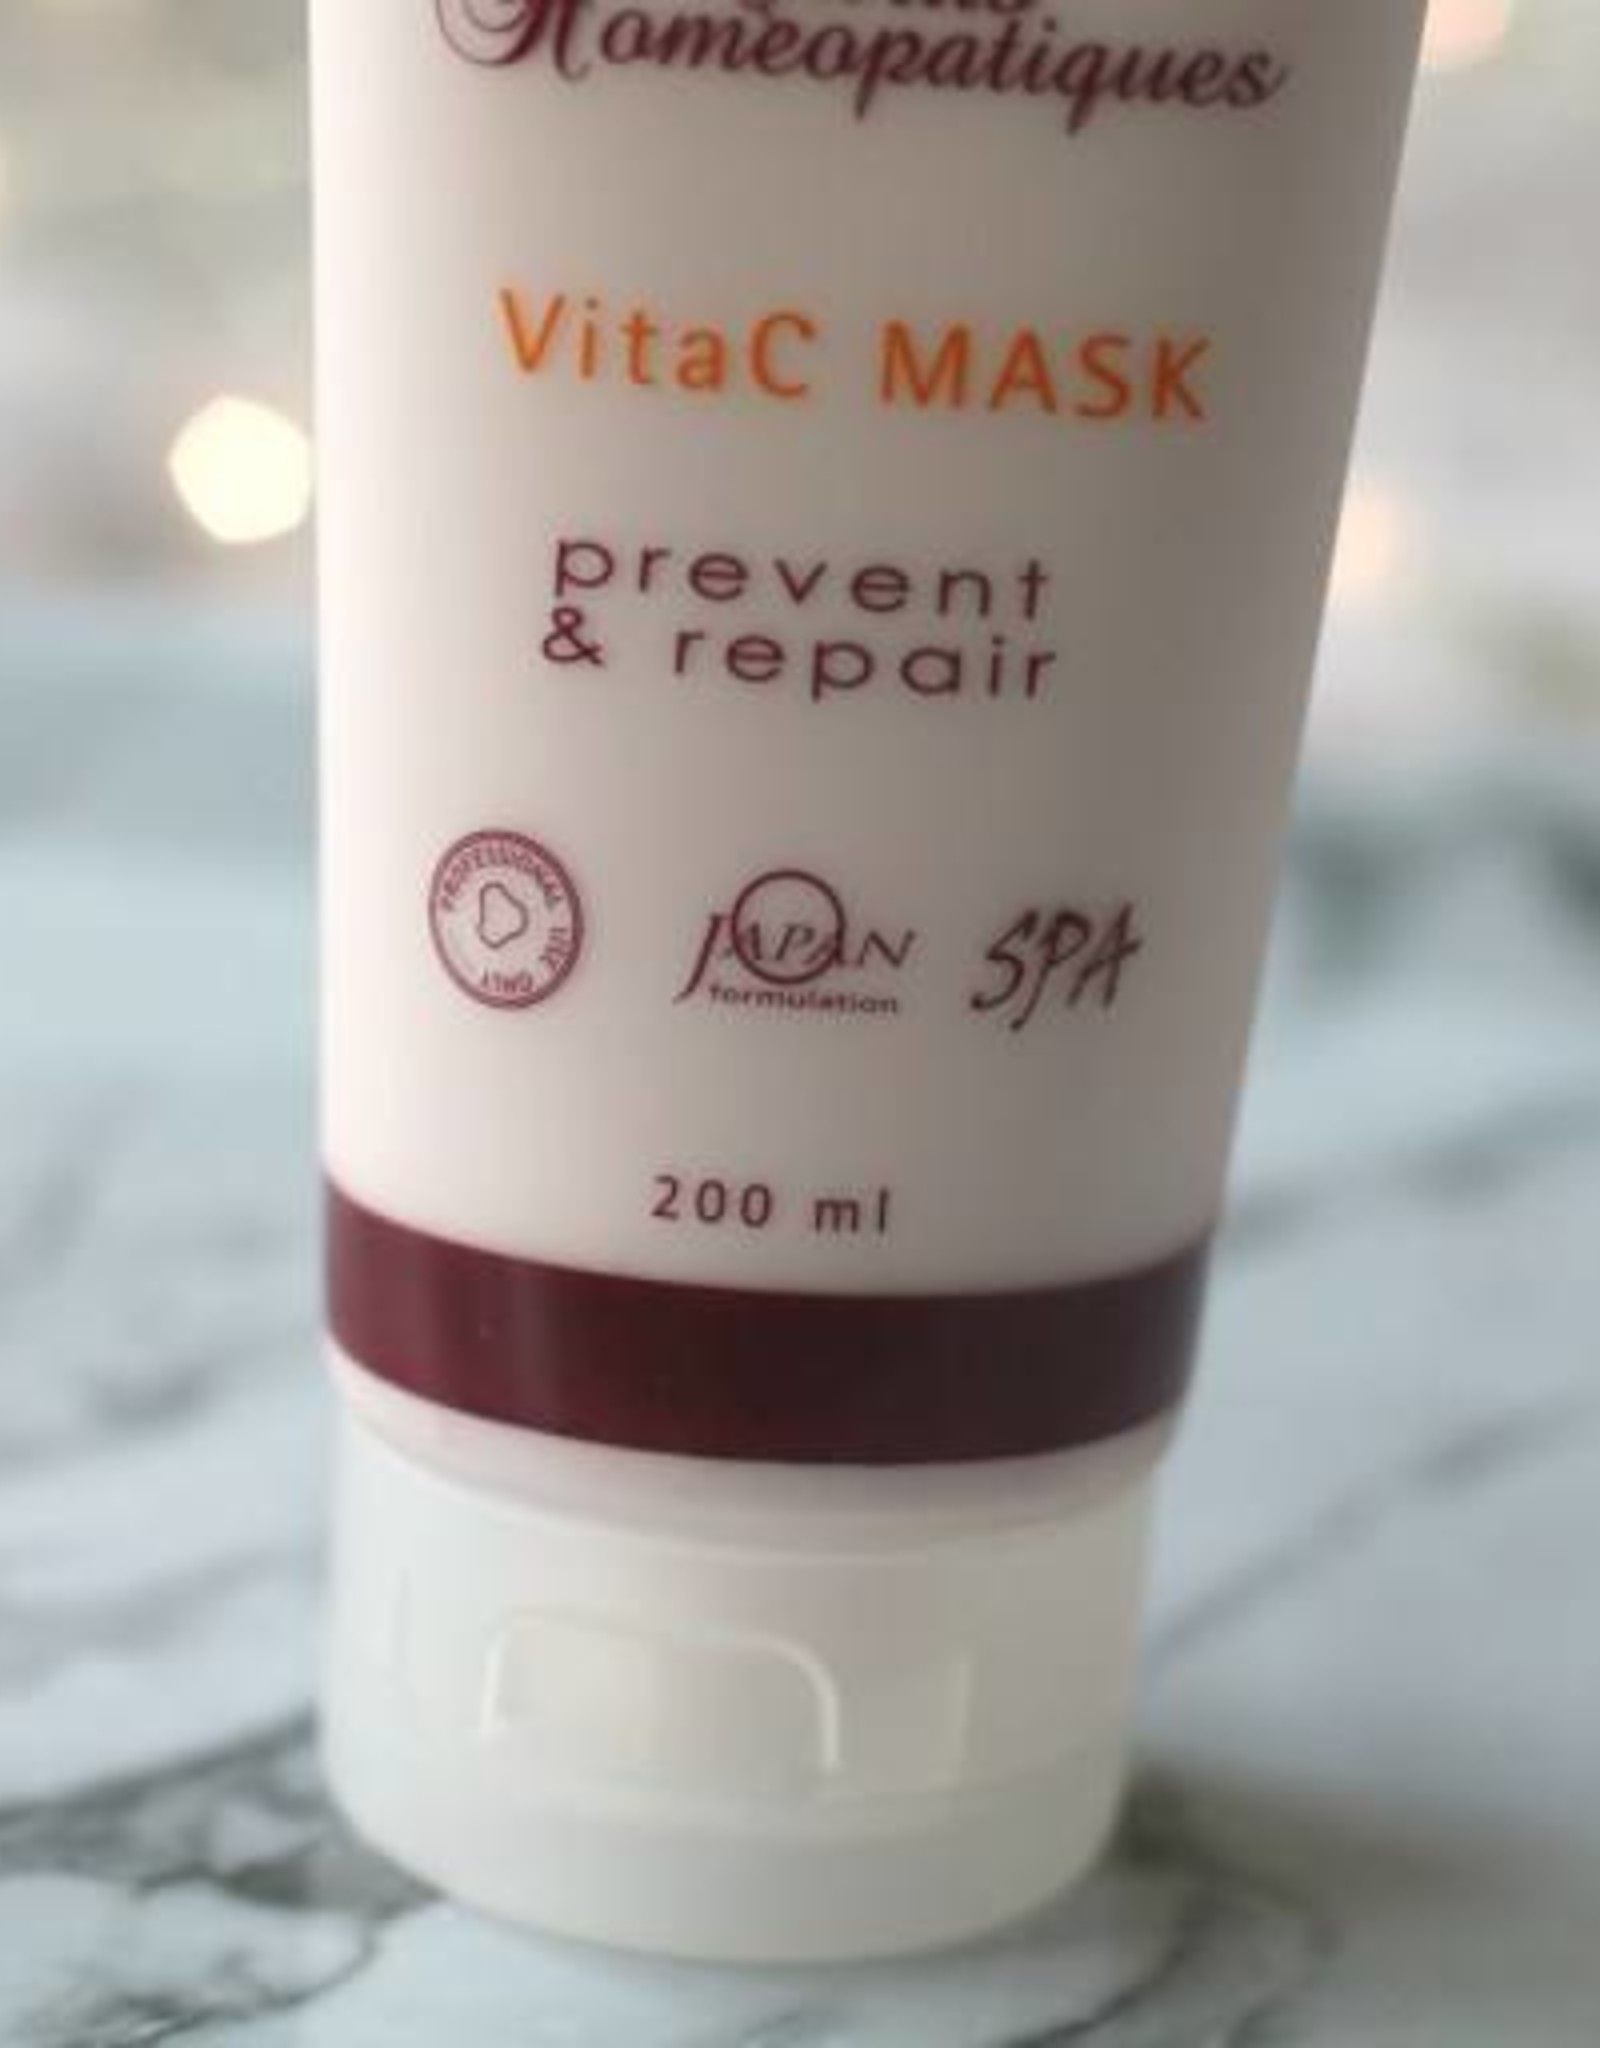 Utsukusy Citus Homeopatique Vitamin C facial mask 200ml